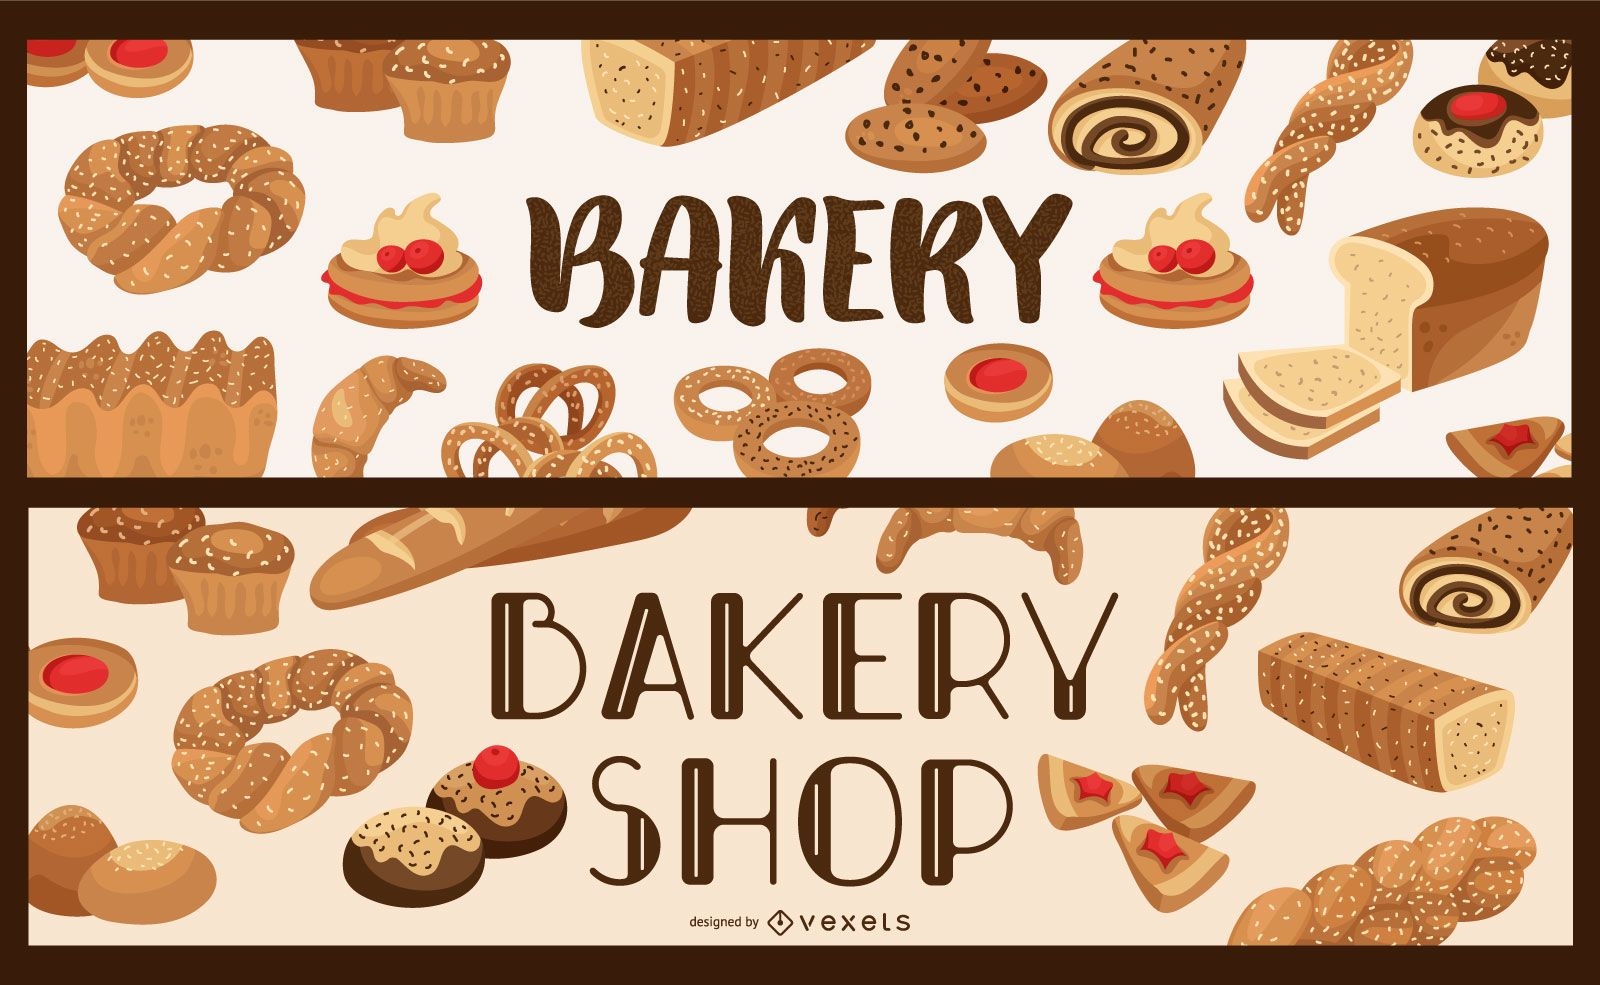 Bakery shop banner set